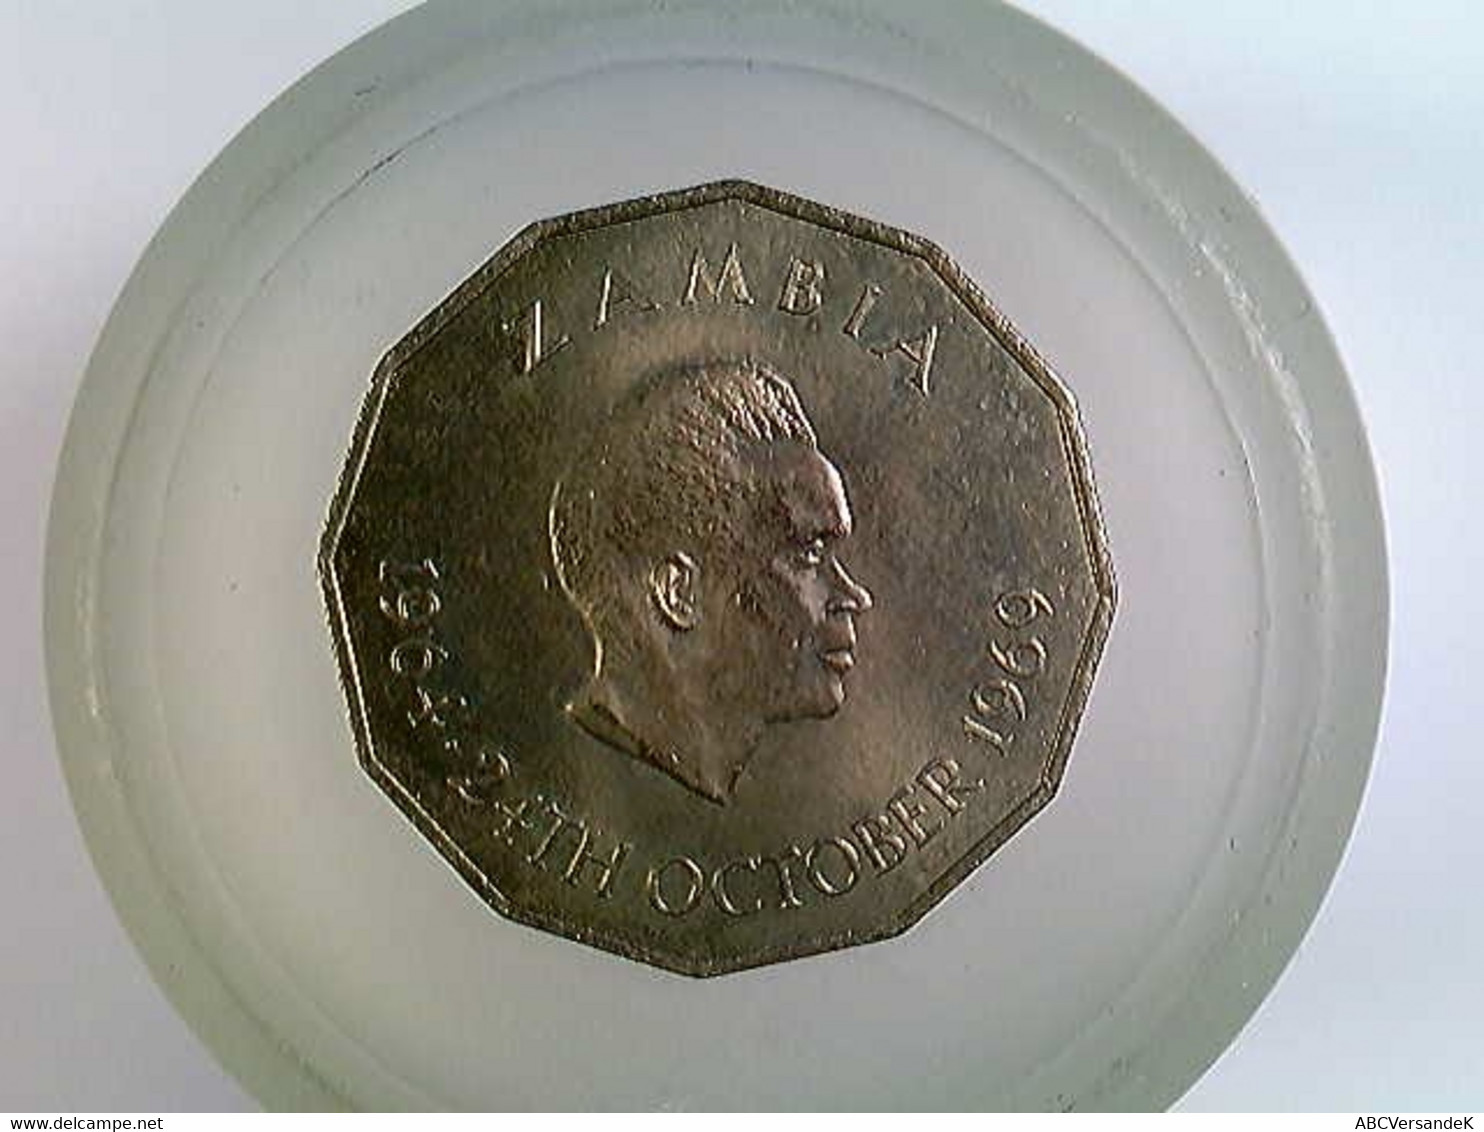 Münze Zambia, 50 Ngwee 1969, FAO, TOP - Numismatics